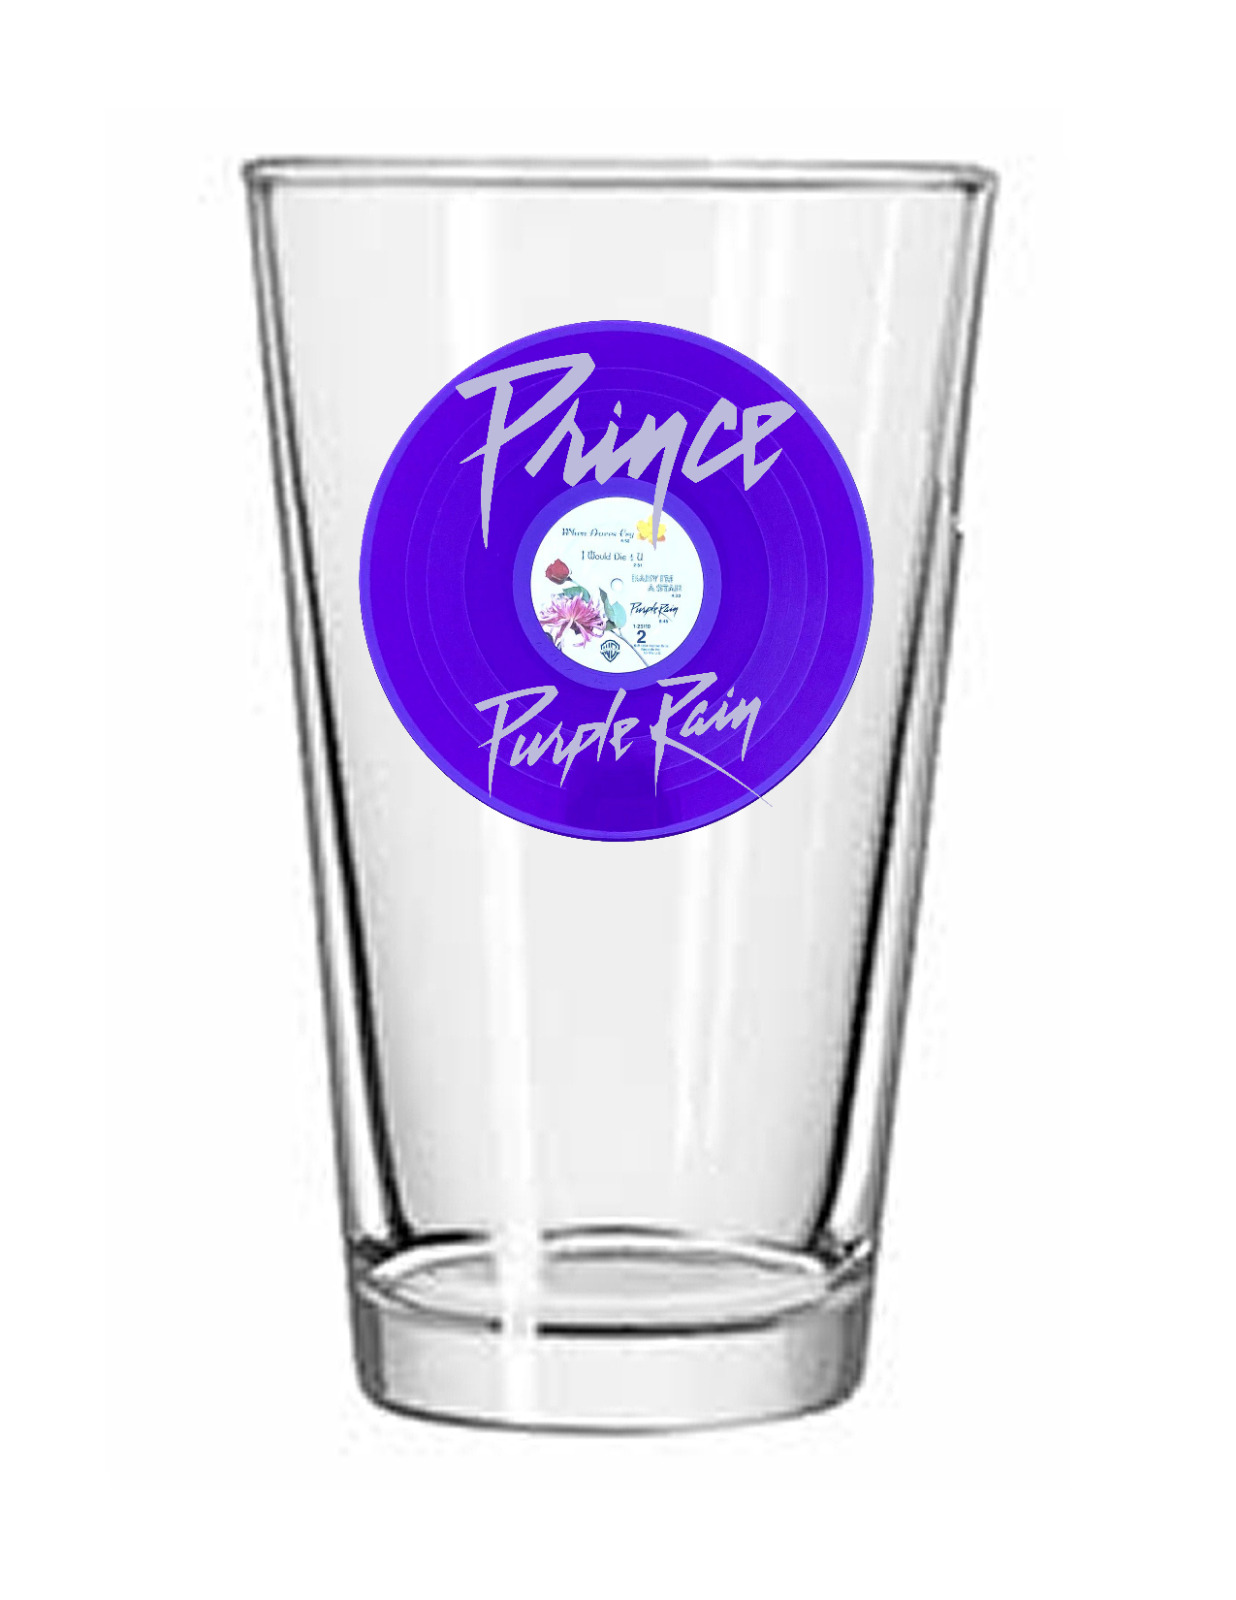 Prince - Purple Rain - Rock and Roll - Blues - 16oz Pint Beer Glass Pub Barware